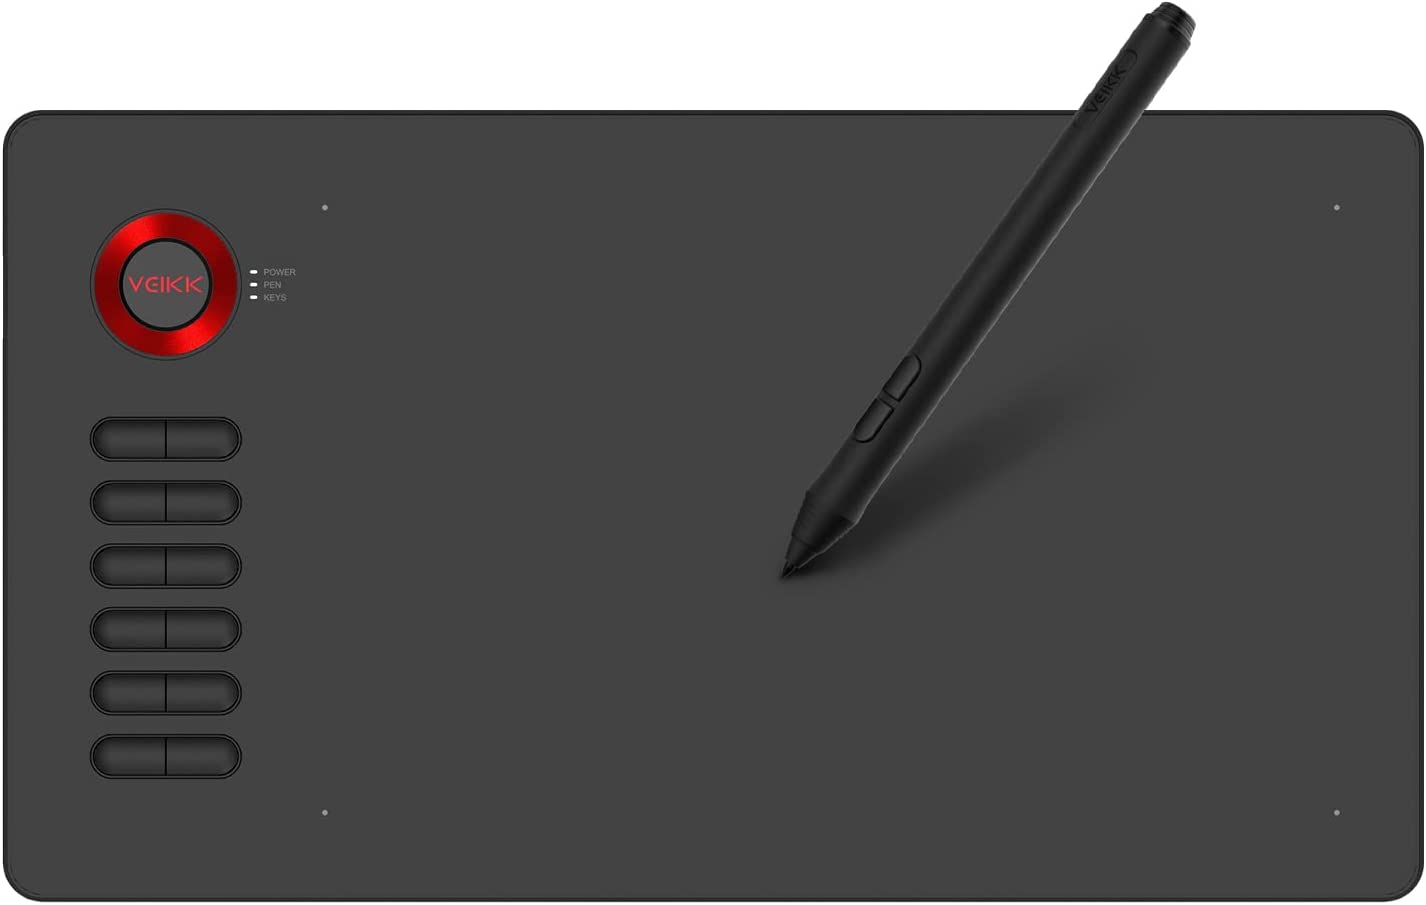 تبلت طراحی ویک VEIKK Drawing Tablet مدل A15 10x6 inch - ارسال 15 الی 20 روز کاری